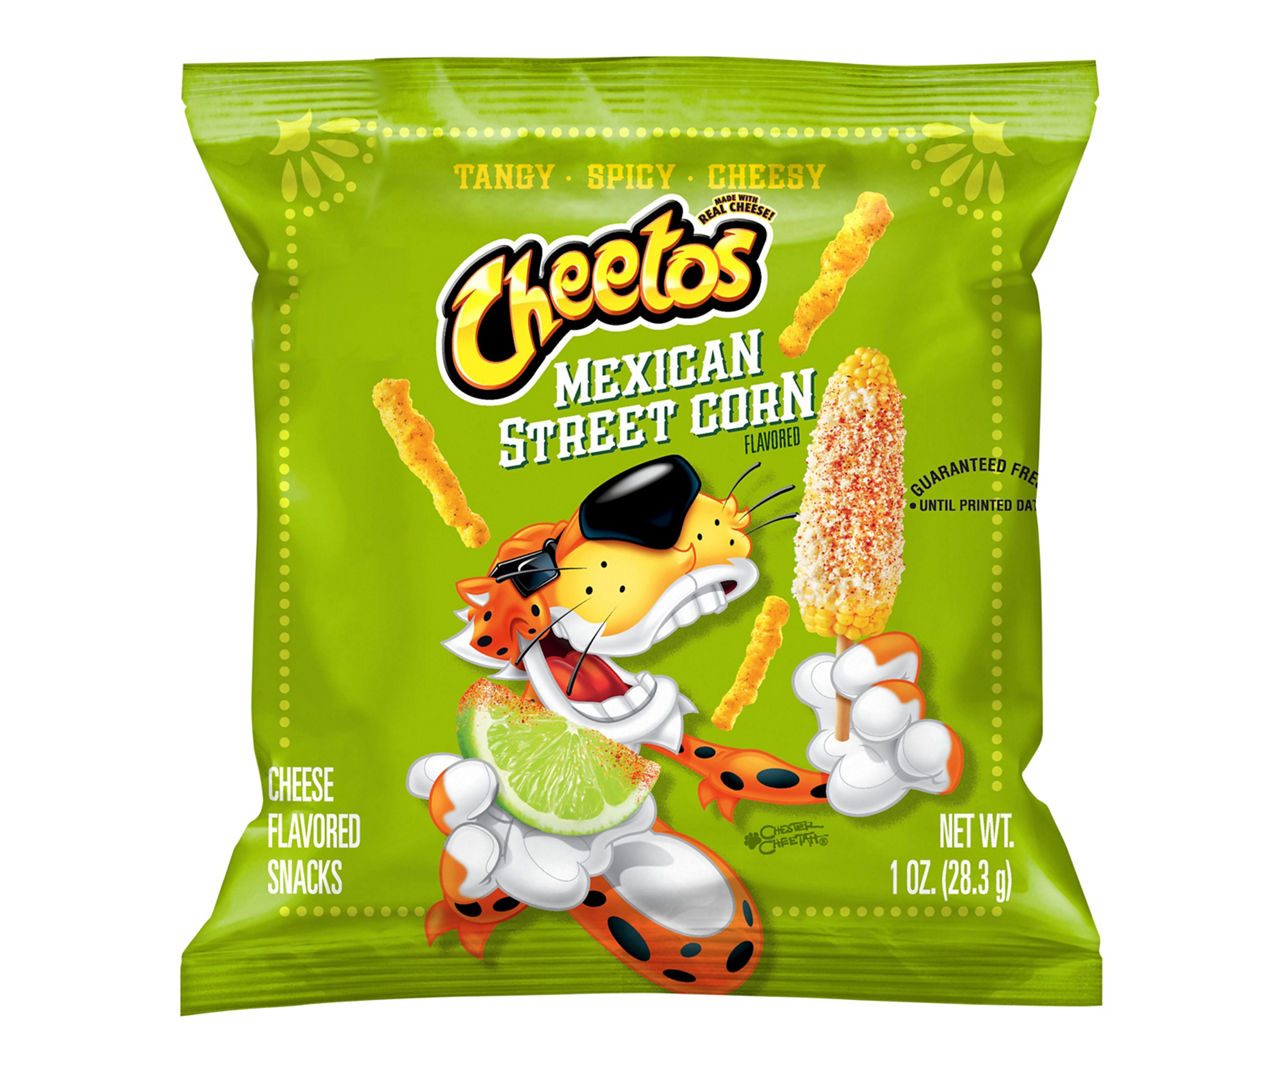 FSSTAM Mexican Street Corn Cheetos 8.5 oz (2 bags) Cheese Spicy 